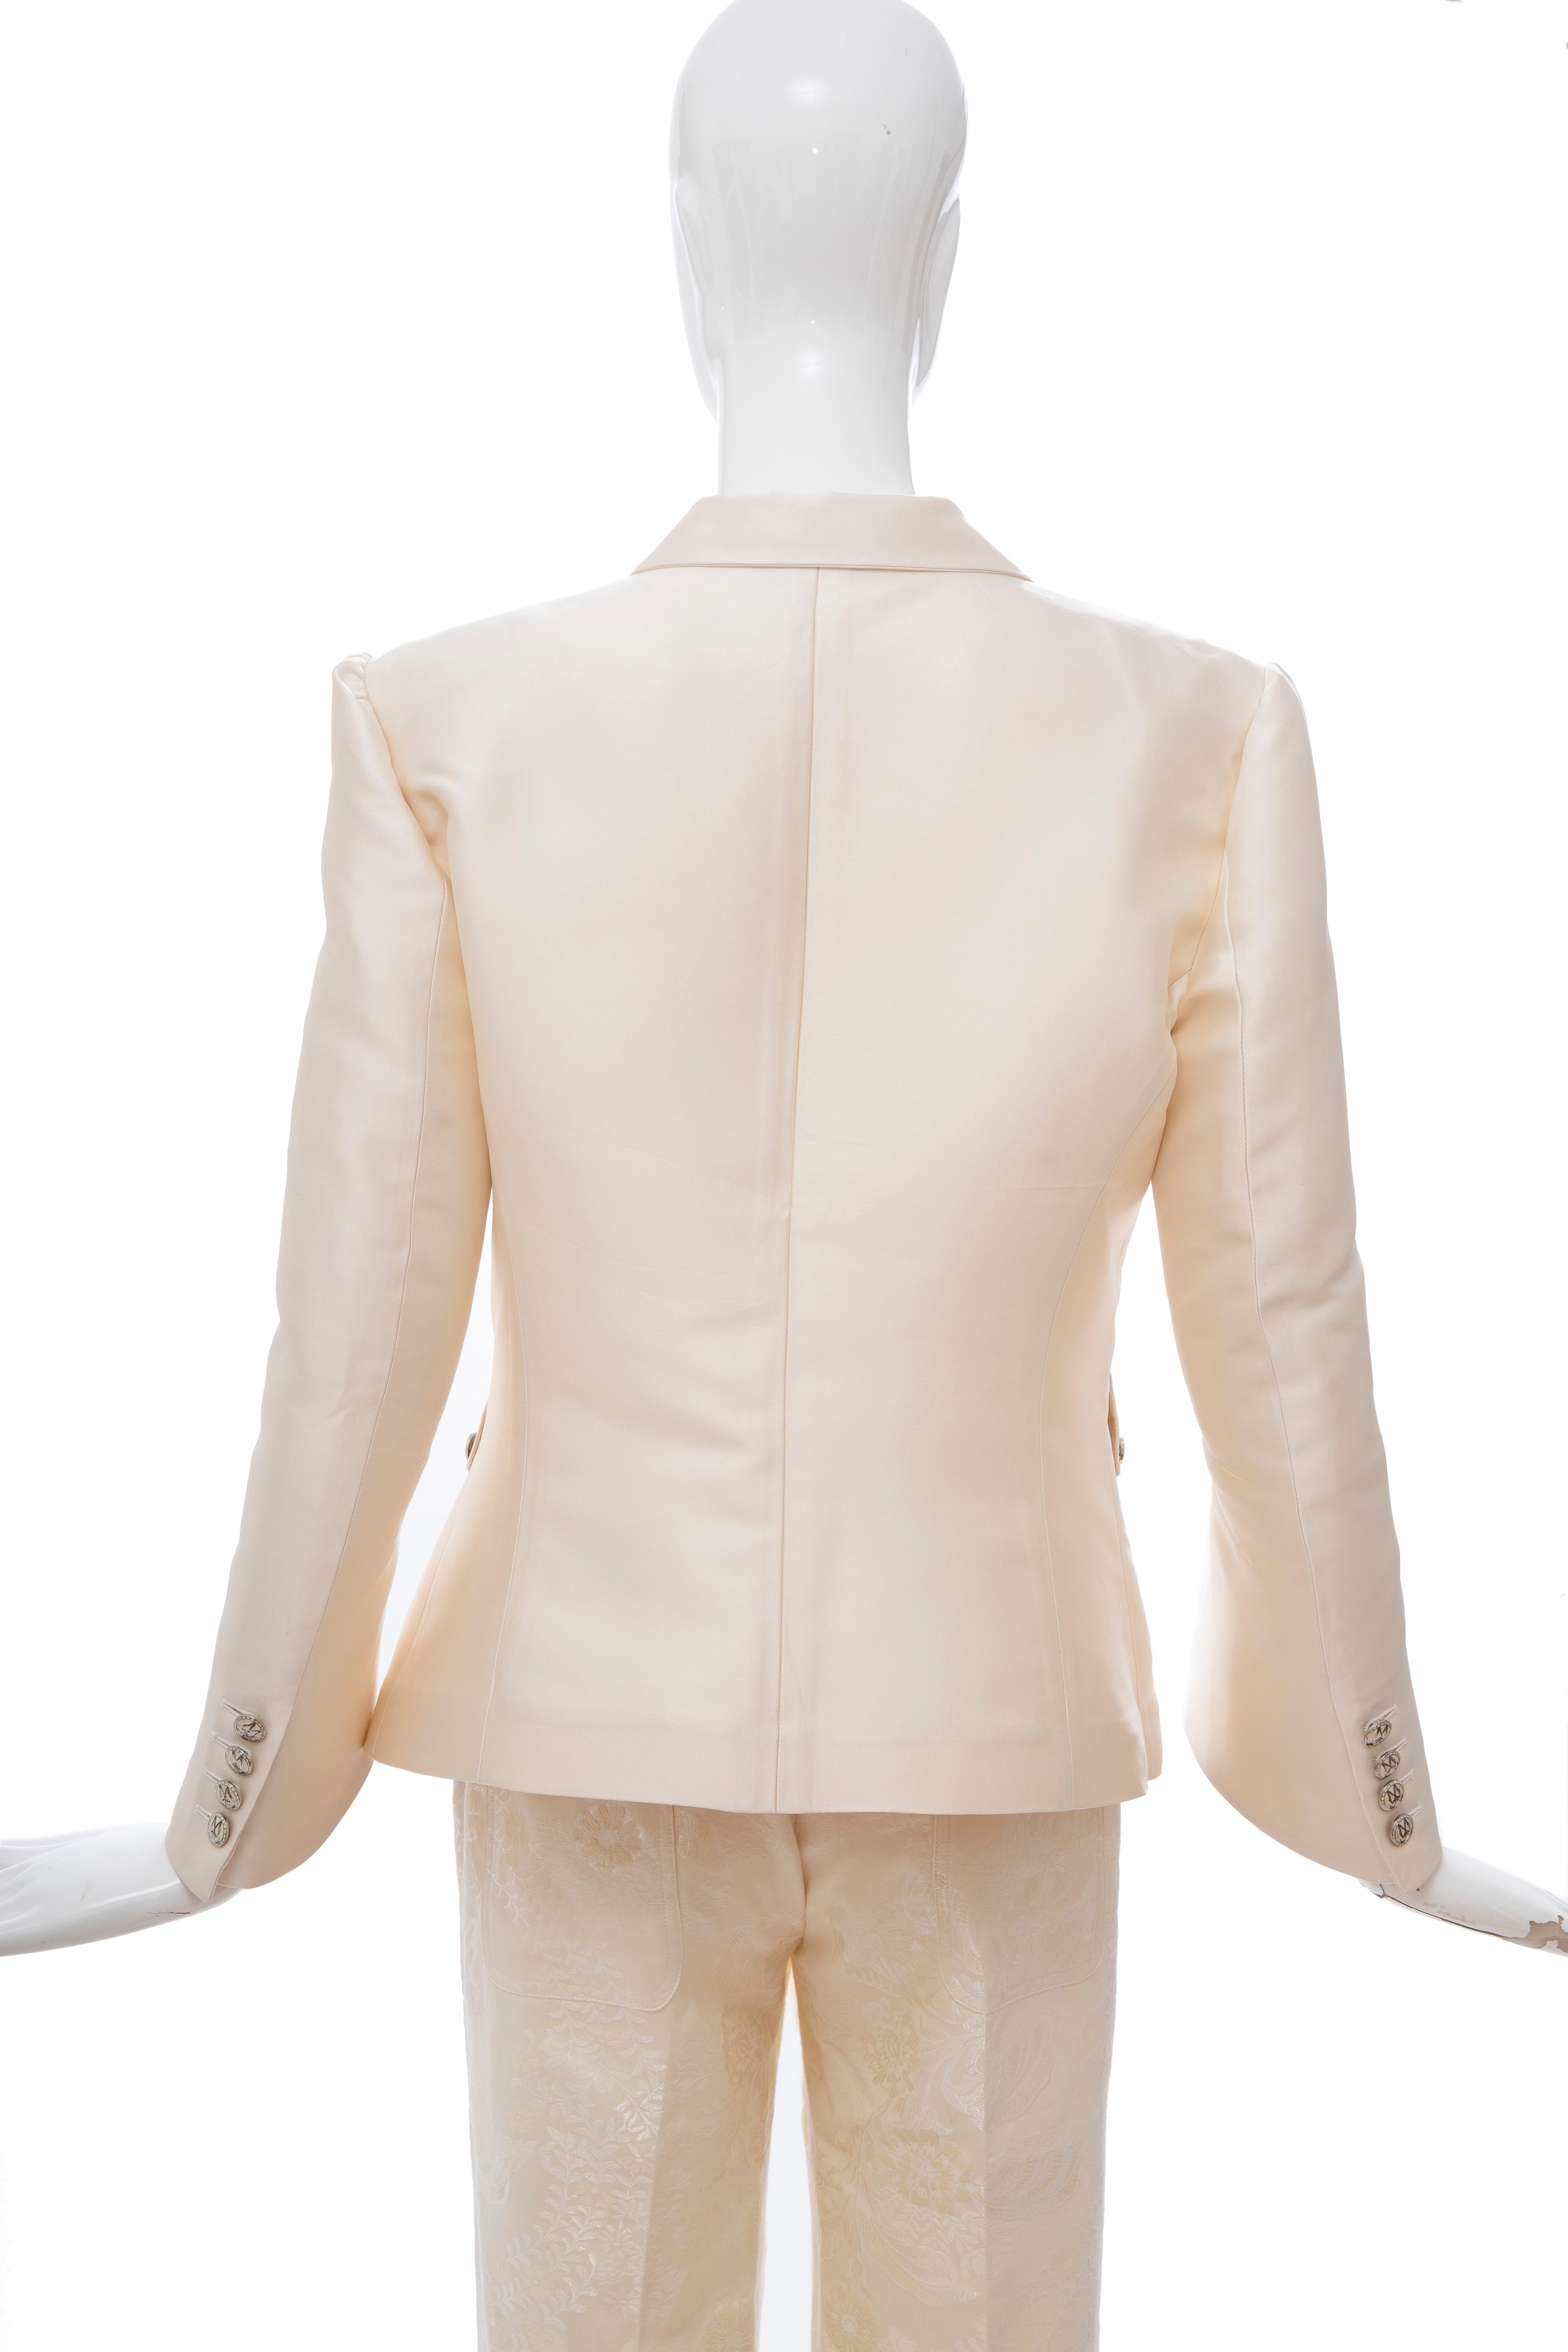 Nicolas Ghesquière for Balenciaga Runway Silk Jacquard Pant Suit, Spring 2006 For Sale 2